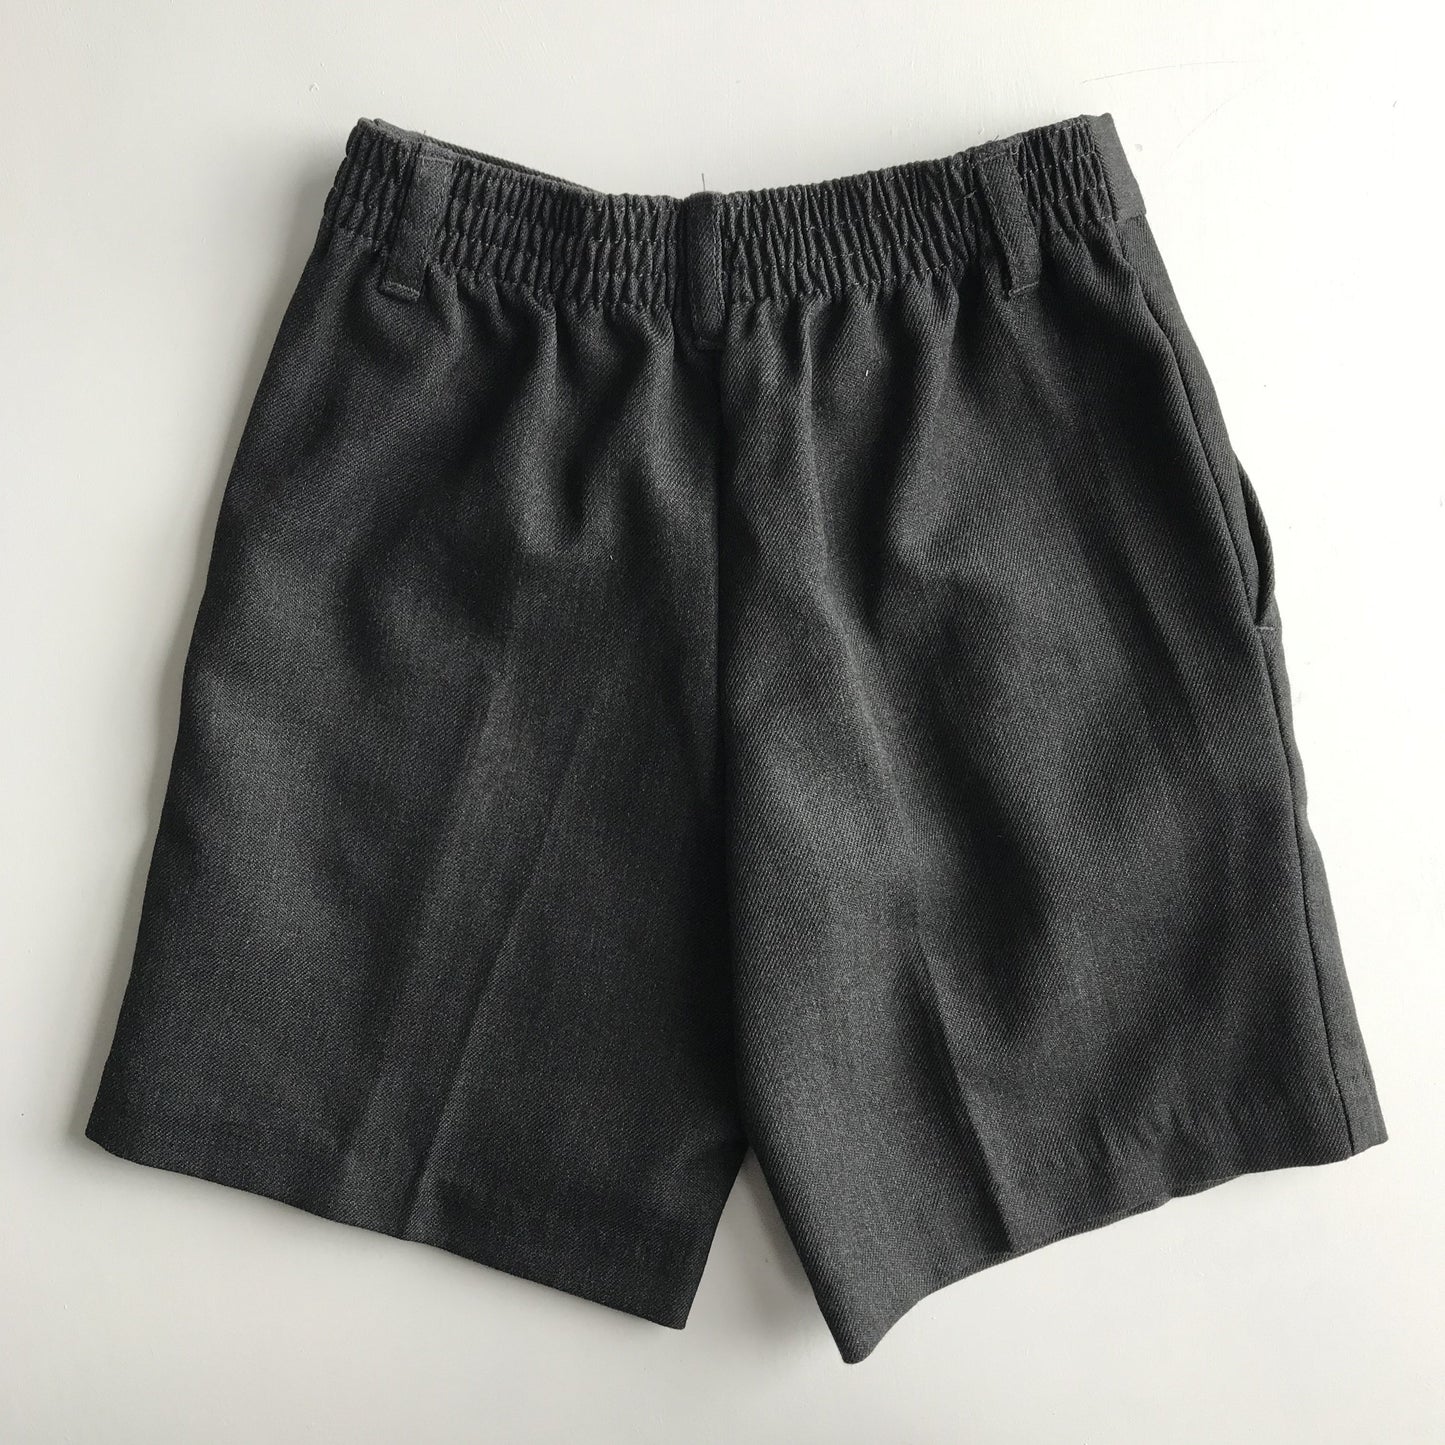 Grey School Shorts with Elasticated Waist